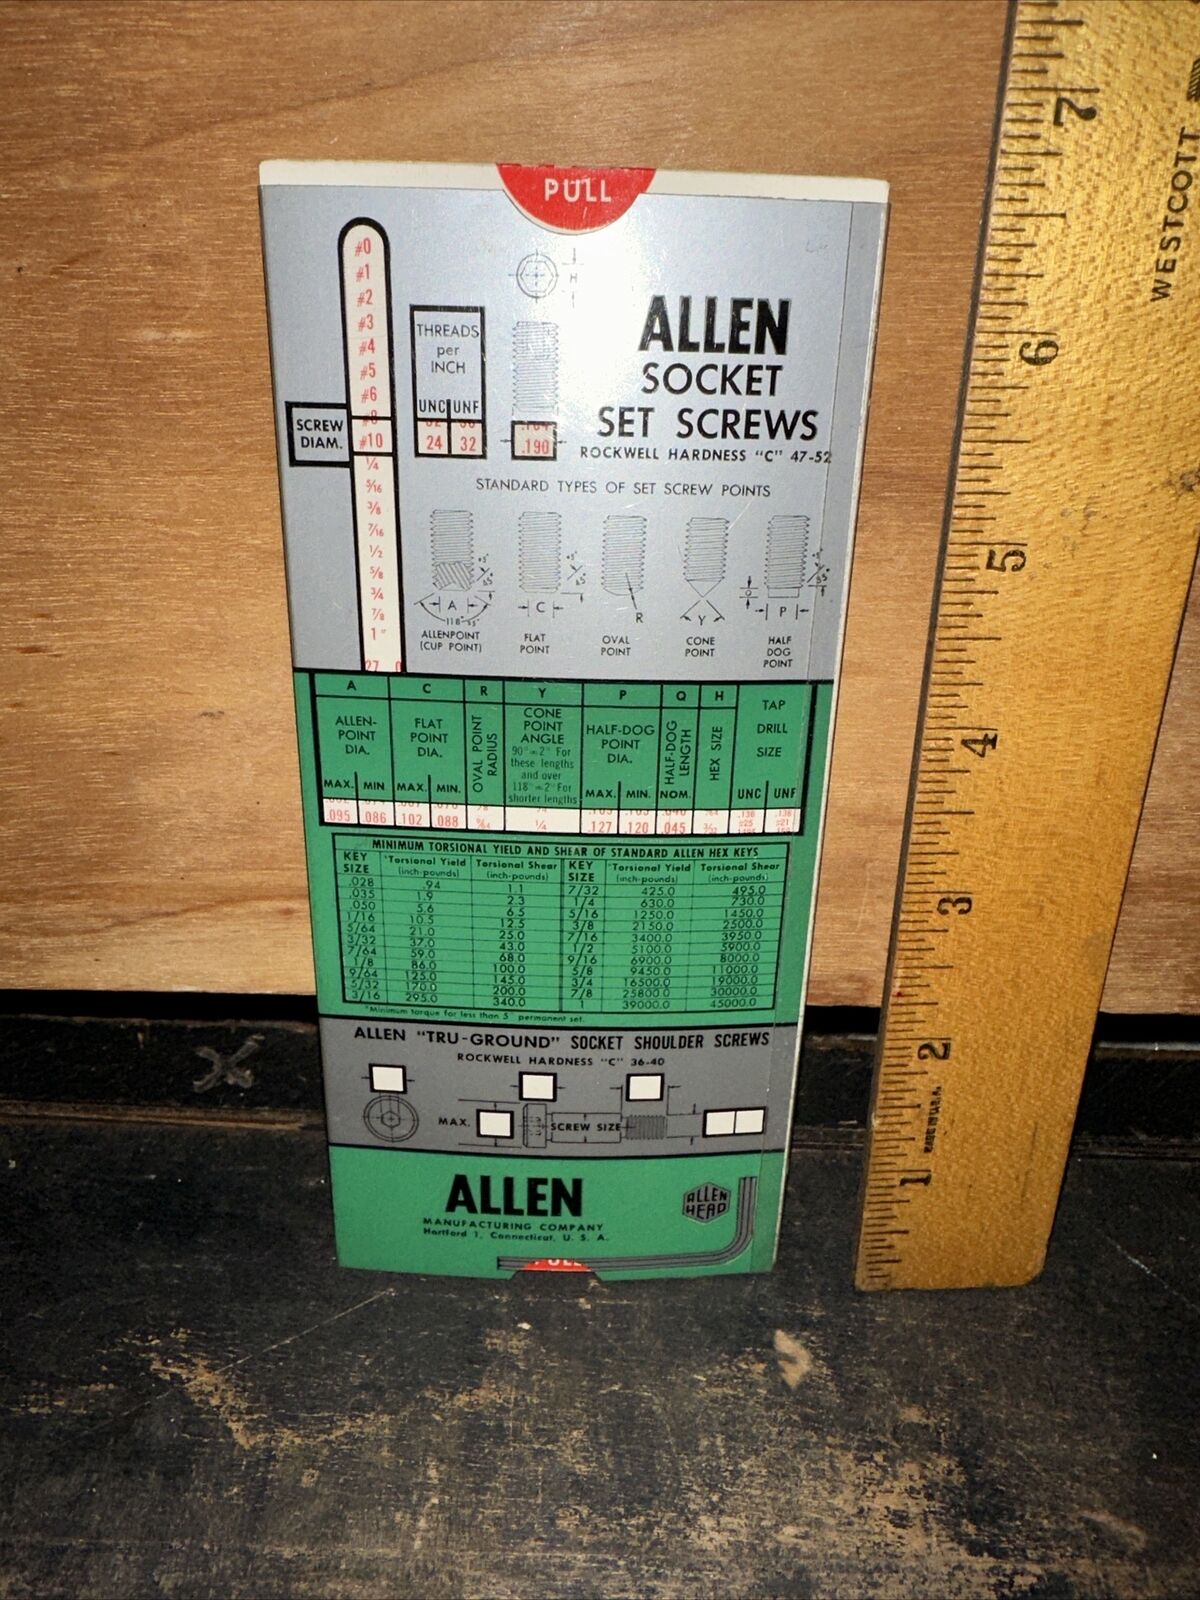 ALLEN SOCKET SET SCREWS (GRAPHING CALCULATOR/SLIDE CHART) THE ALLEN MFG CO. 1963